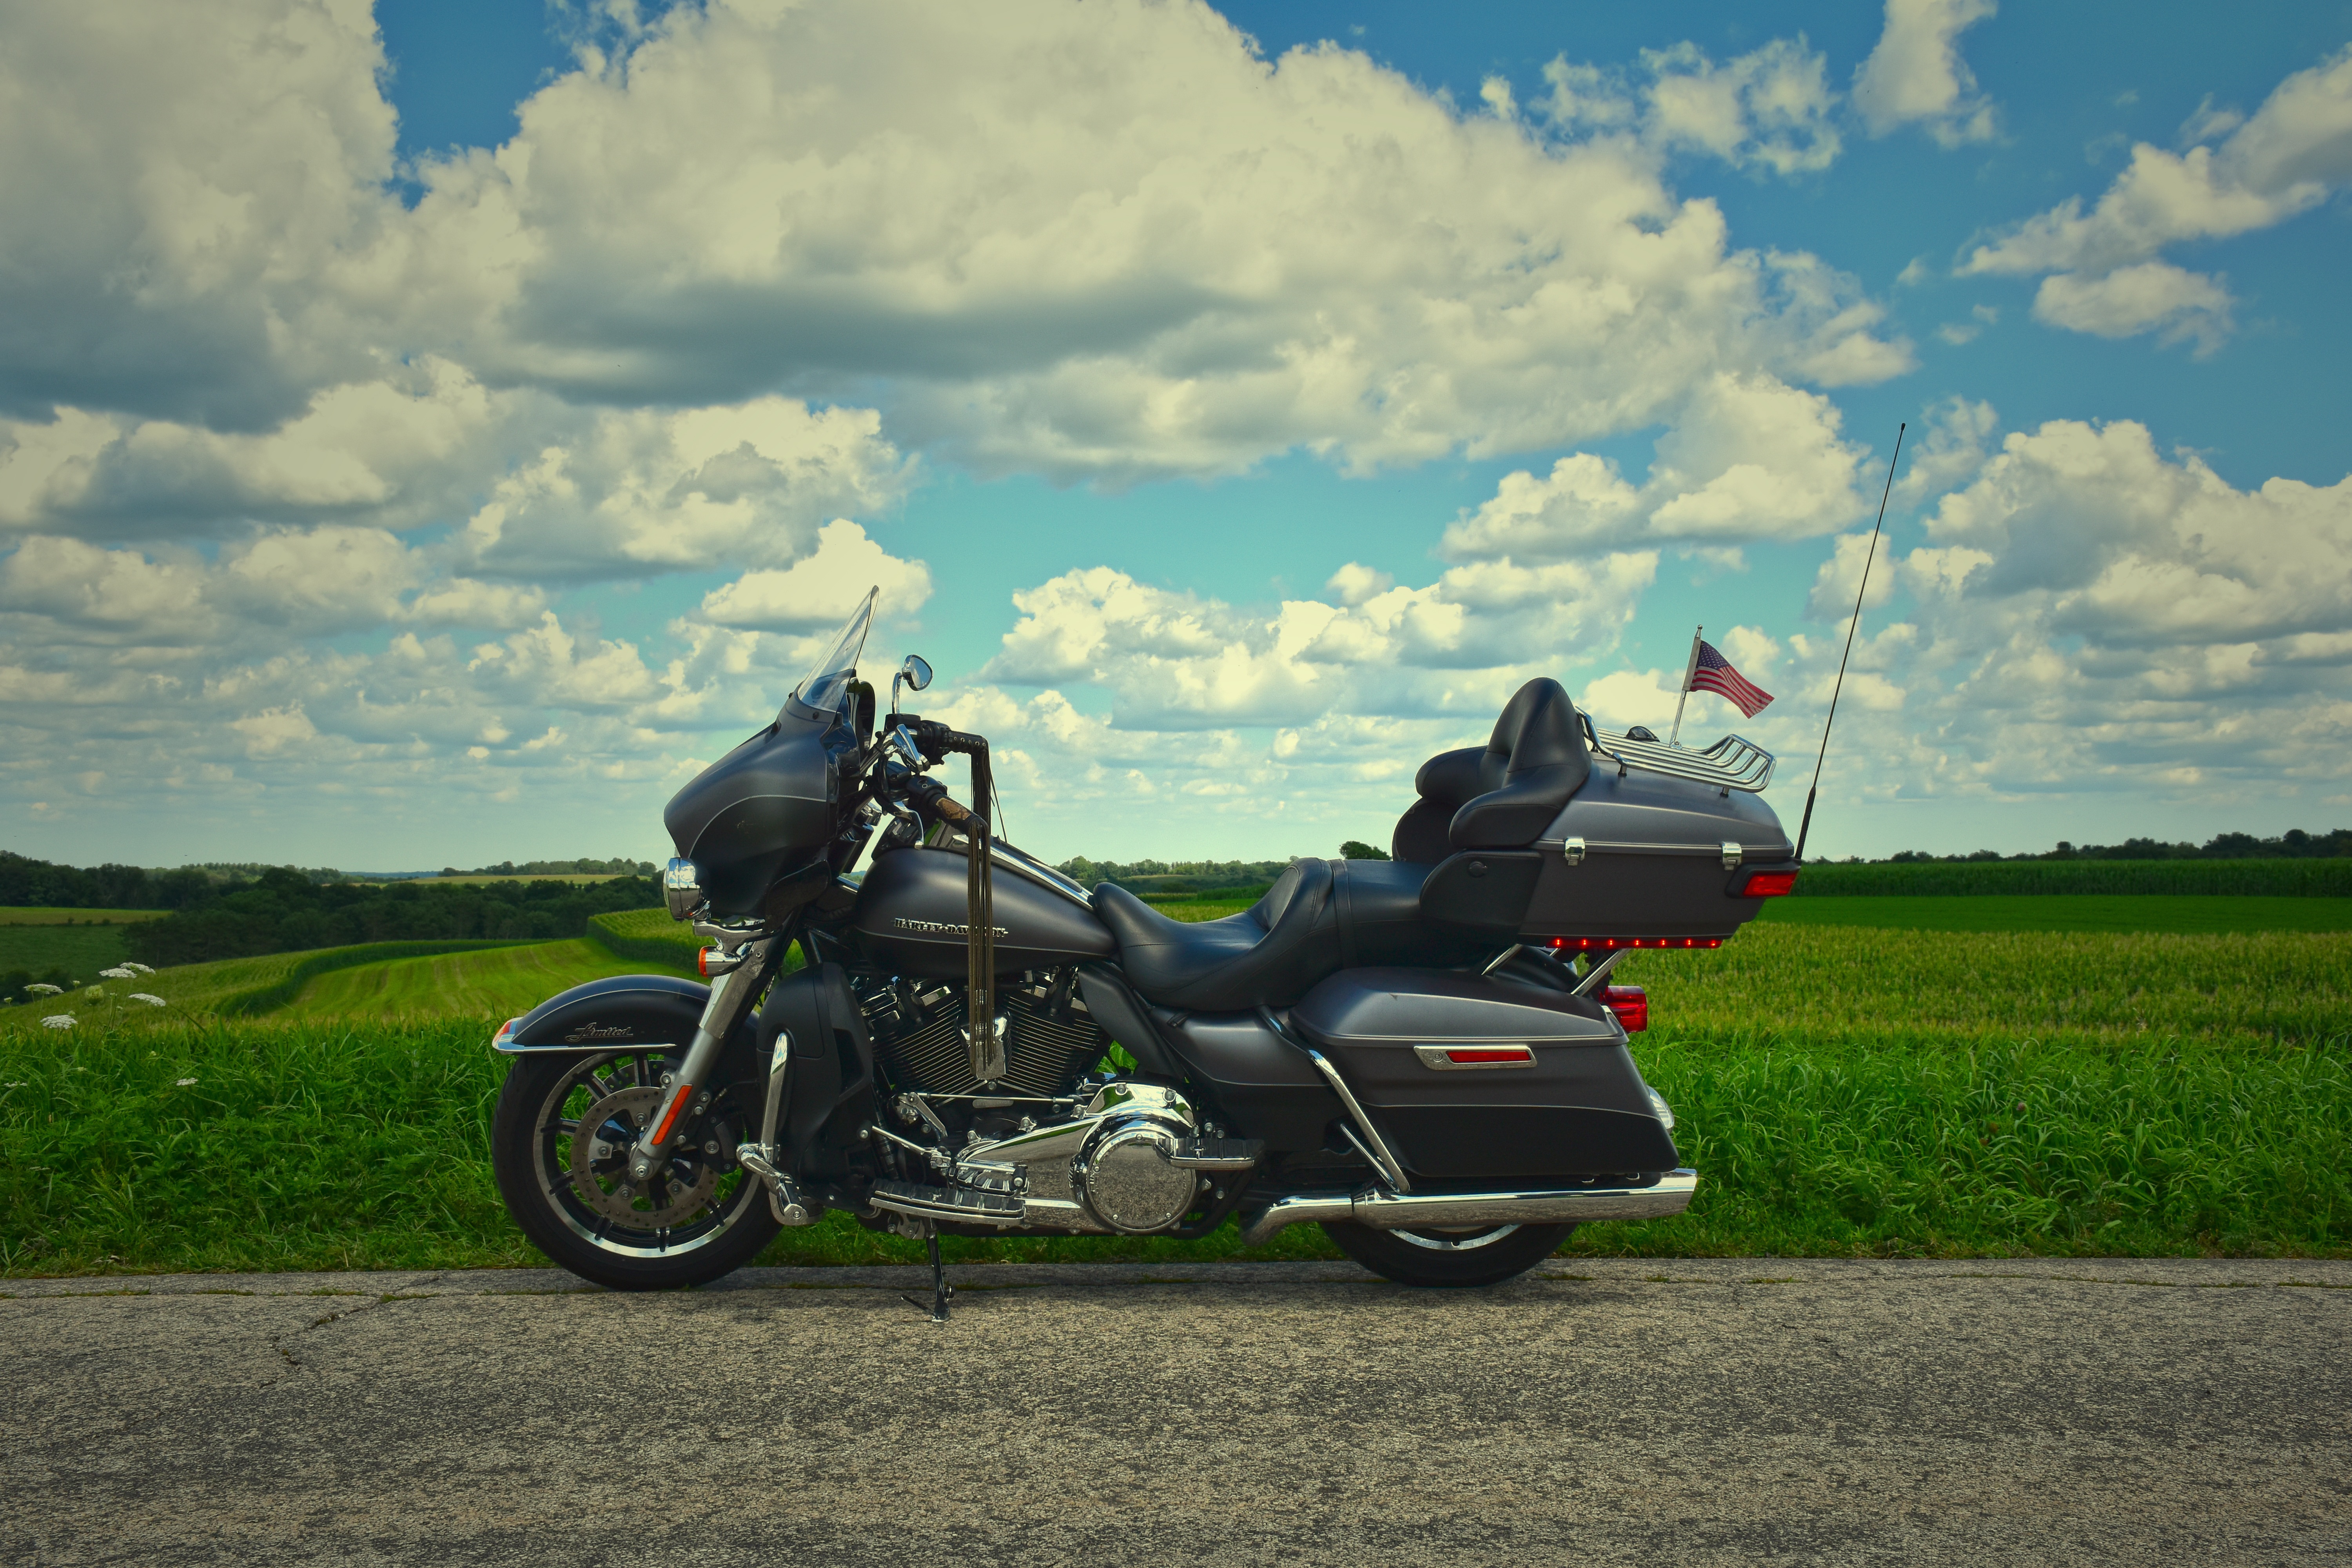 Скачать обои бесплатно Harley Davidson, Дорога, Облака, Мотоцикл, Байк, Путешествие, Мотоциклы картинка на рабочий стол ПК